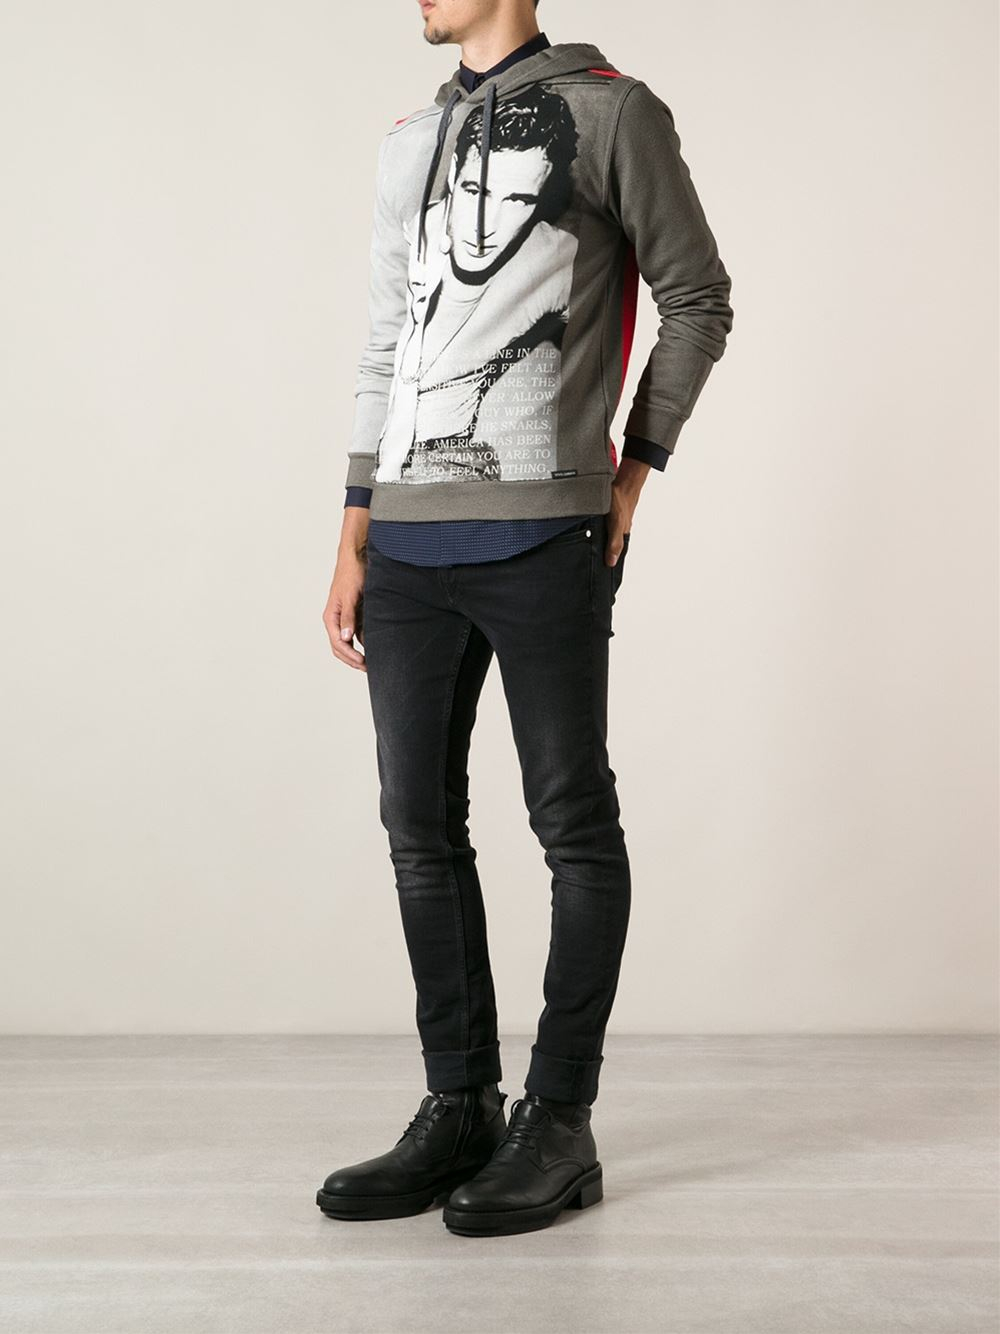 Lyst - Dolce & Gabbana 'Marlon Brando' Sweatshirt in Gray for Men